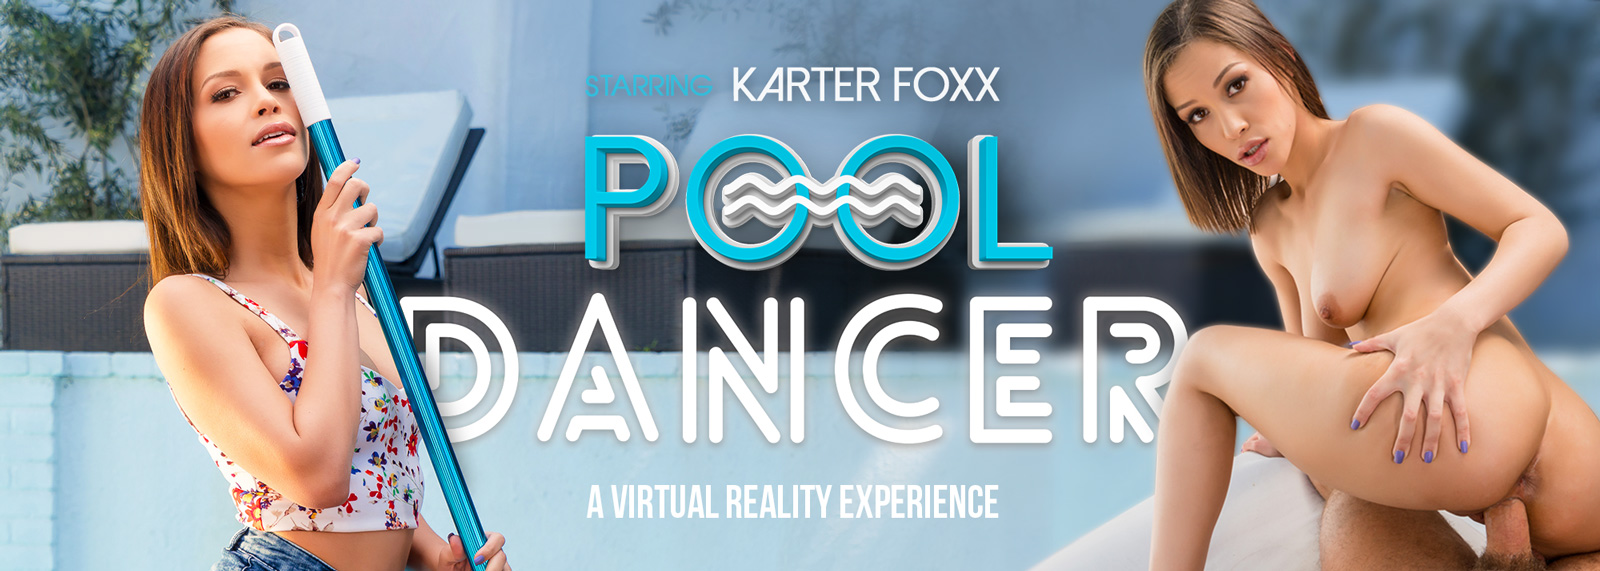 Pool Dancer with Karter Foxx  Slideshow